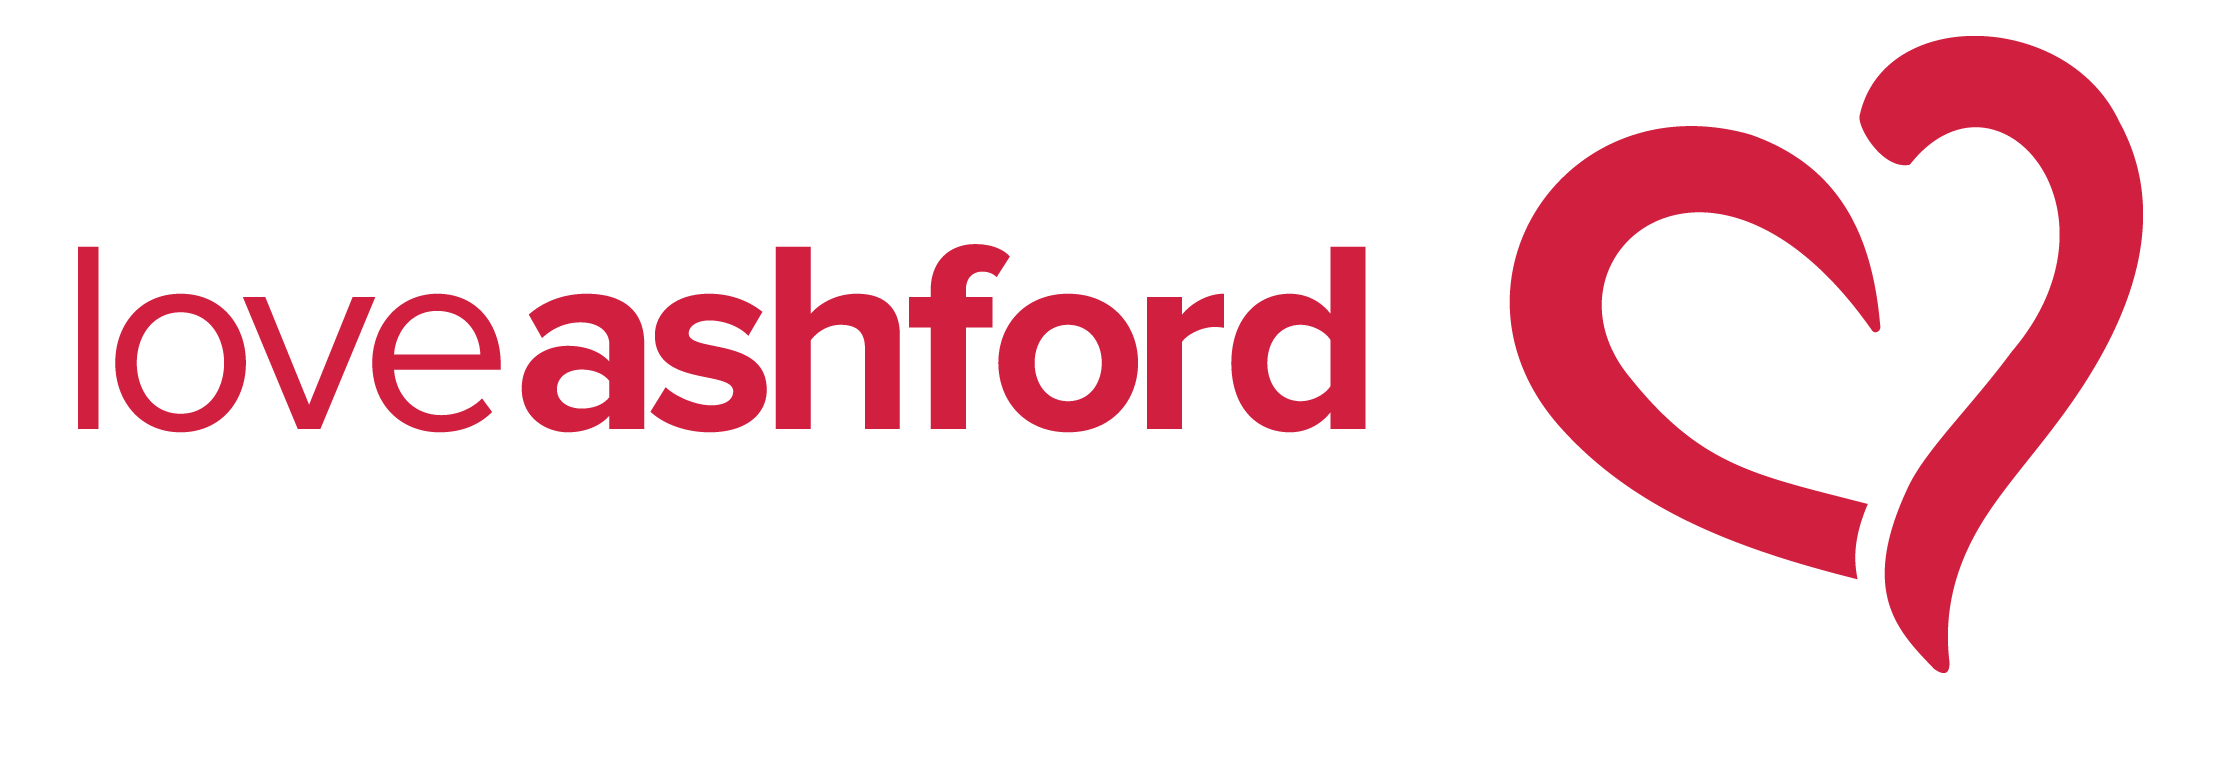 Love Ashford, business support ashford